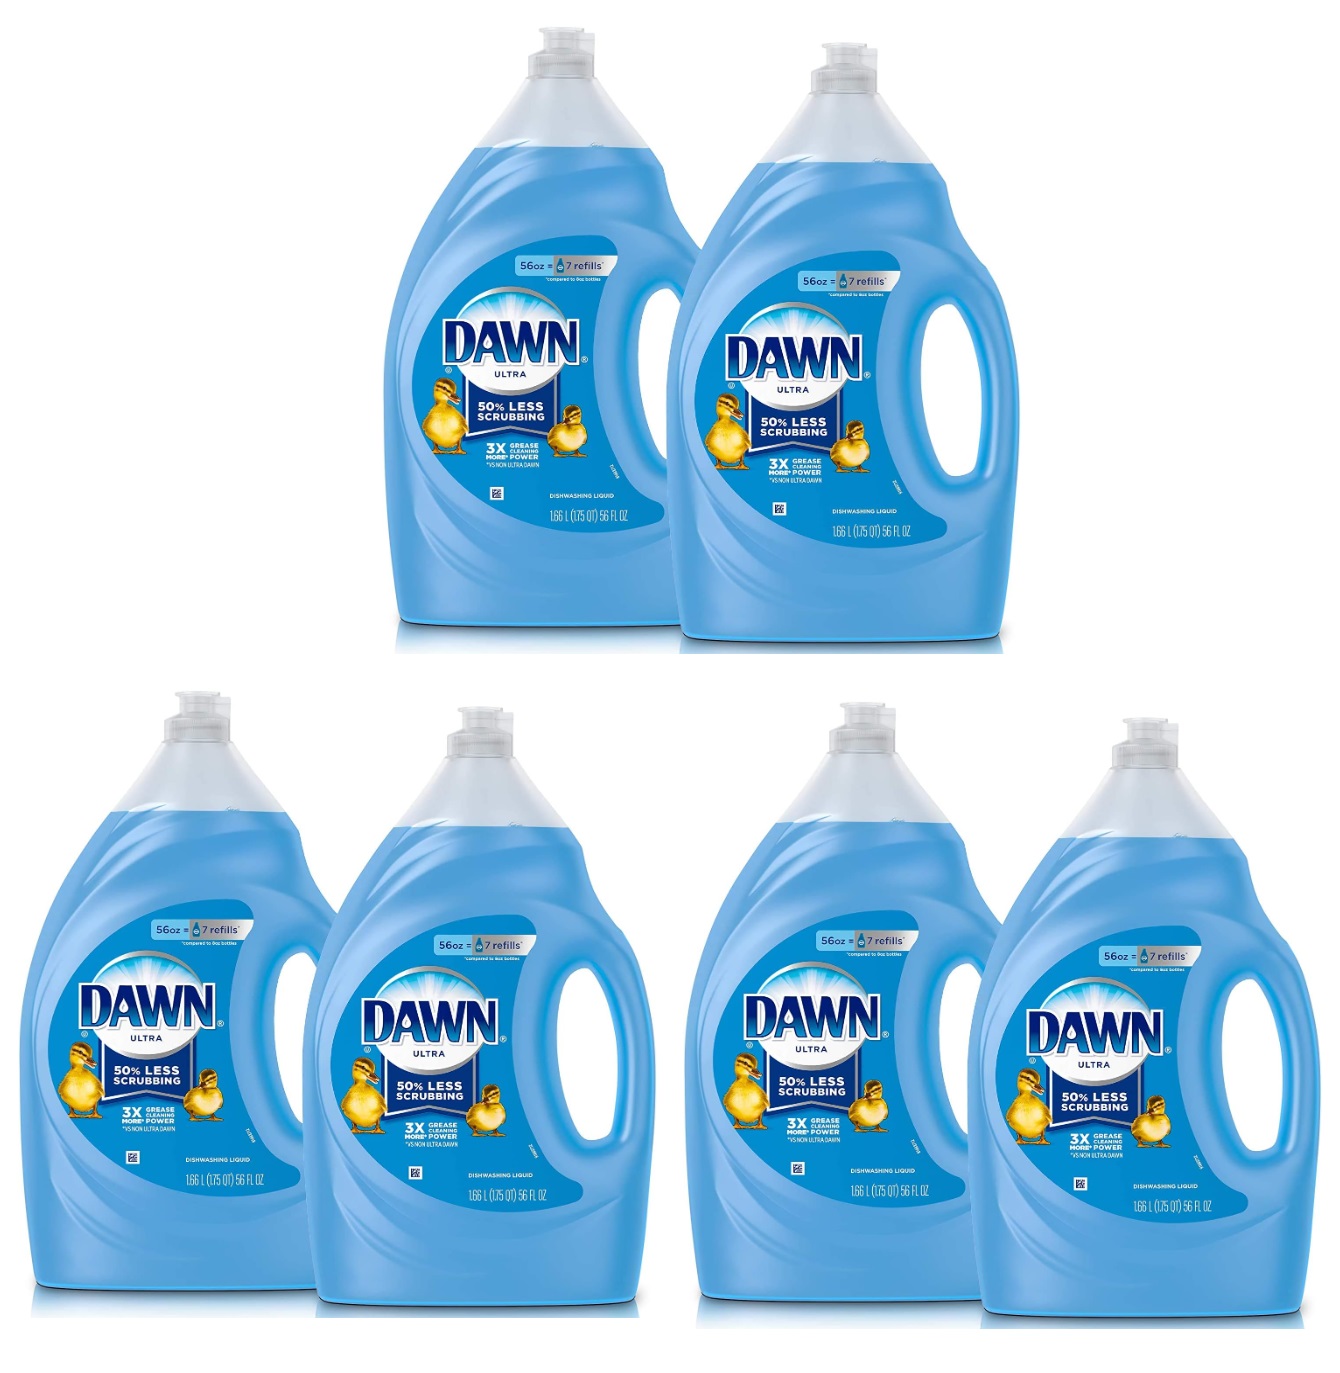 2-Pack 56-Oz. Dawn Ultra Dishwashing Liquid Soap (Original Scent) 3 for $48.12 + $15 Amazon Credit w/ S&S + Free Shipping